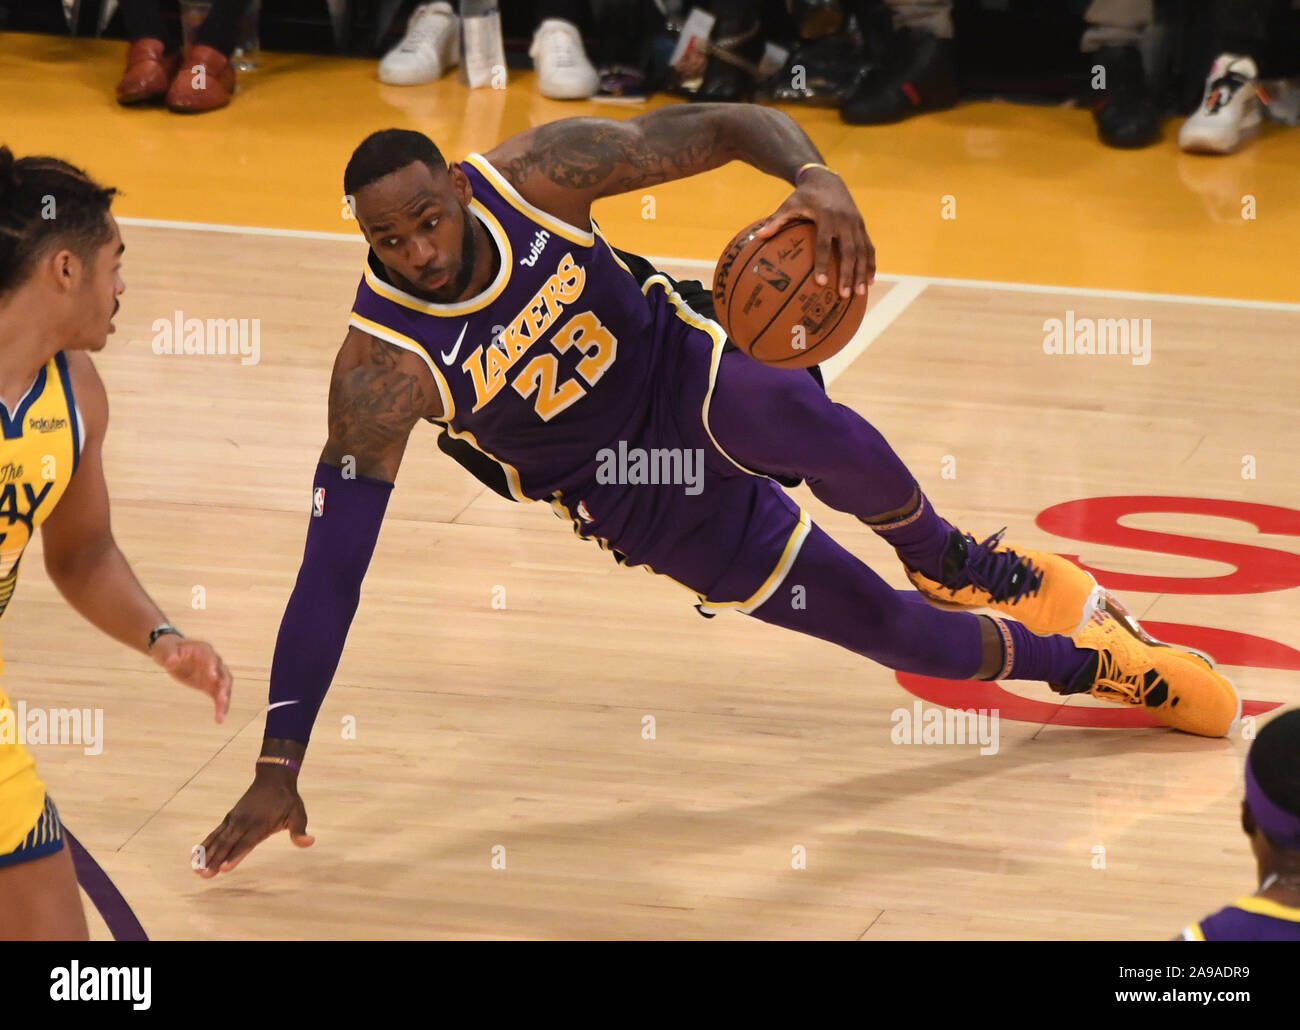 Photos: Lakers at Bulls (1/23/21) Photo Gallery